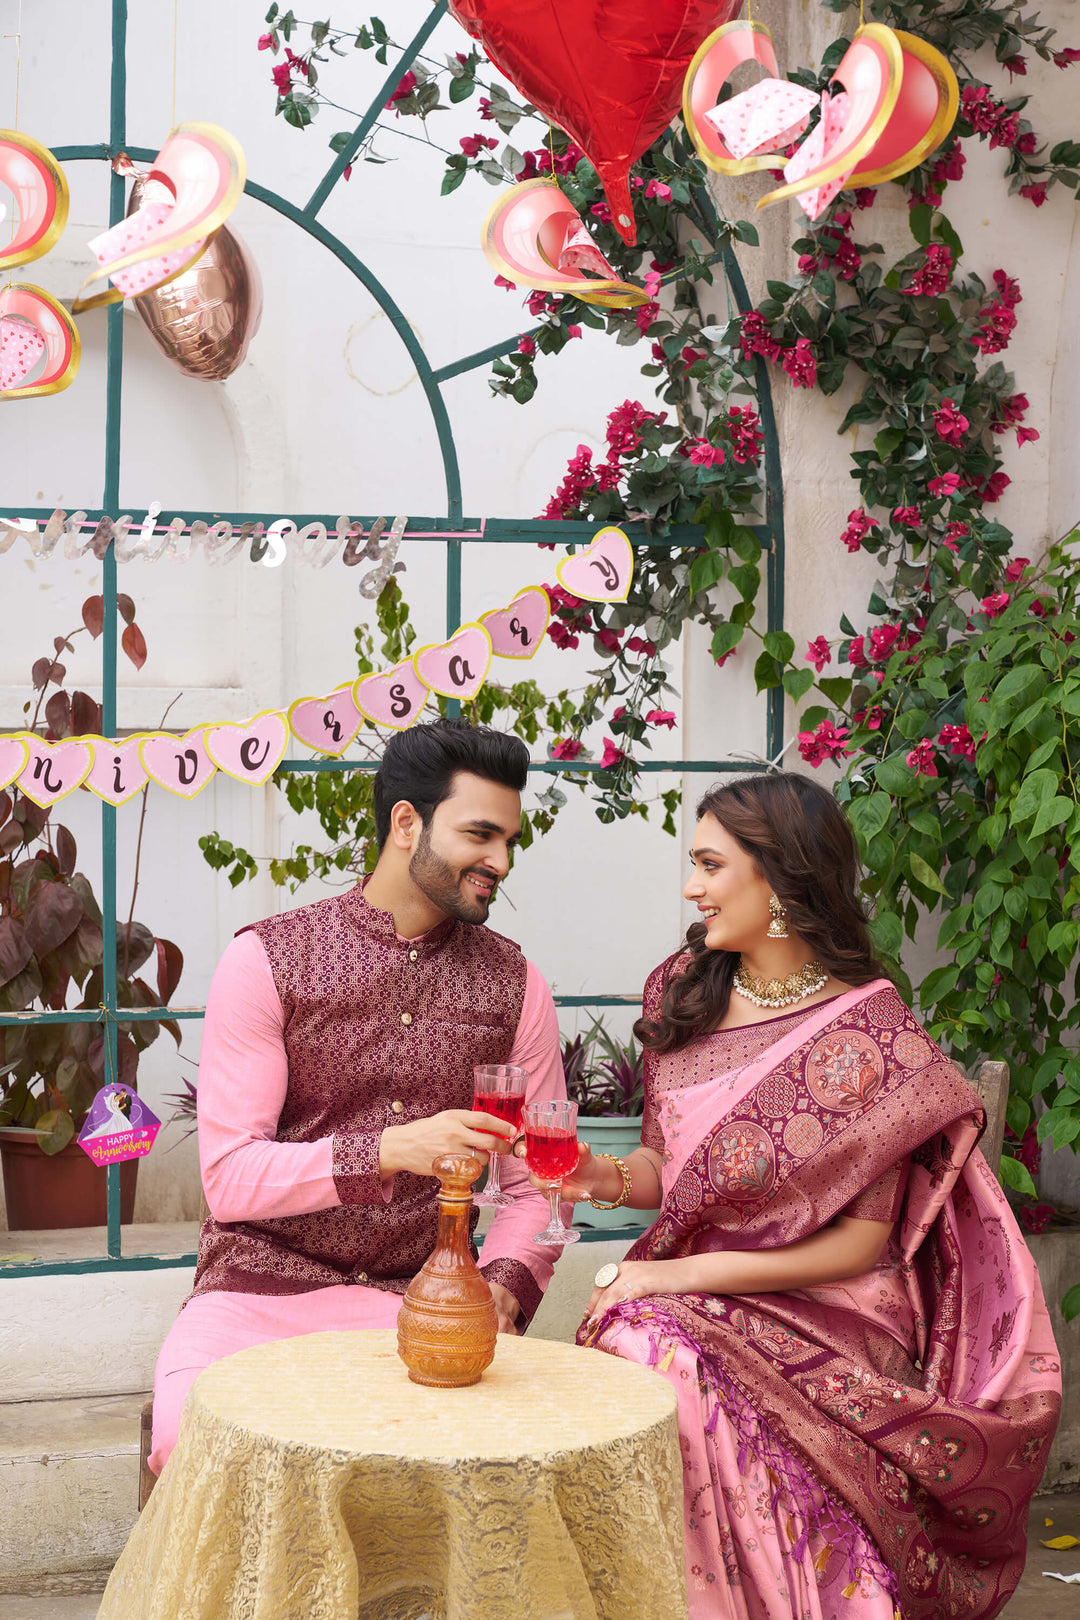 Richie Rich Gold Pink Couple Matching Dress Kanjivaram Silk Saree and Kurta pyjama with Nehru Jacket